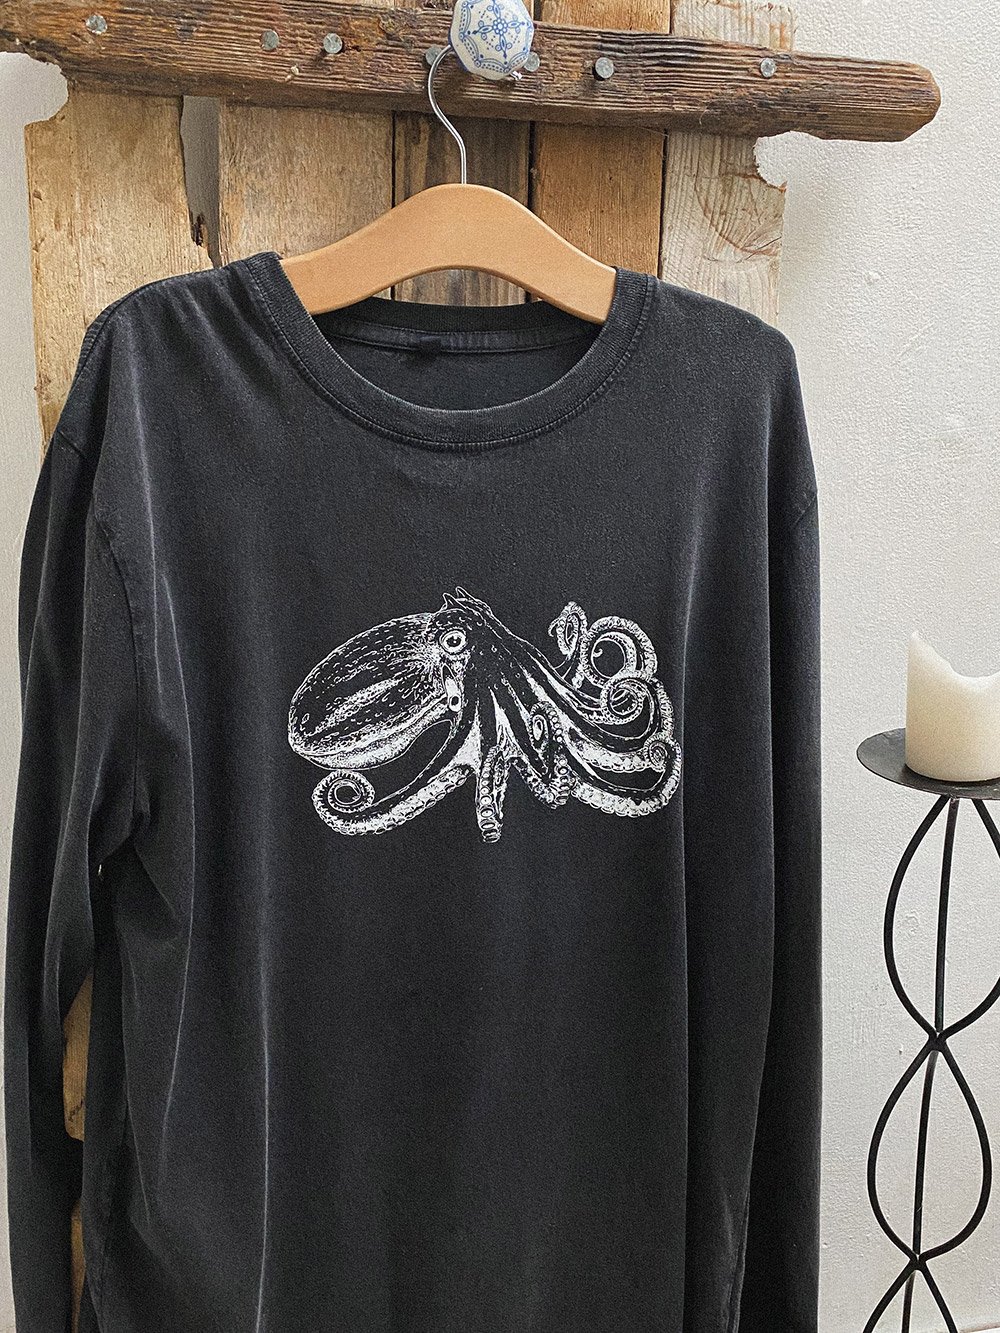 Seahorse T-shirt - Lifeforms Art